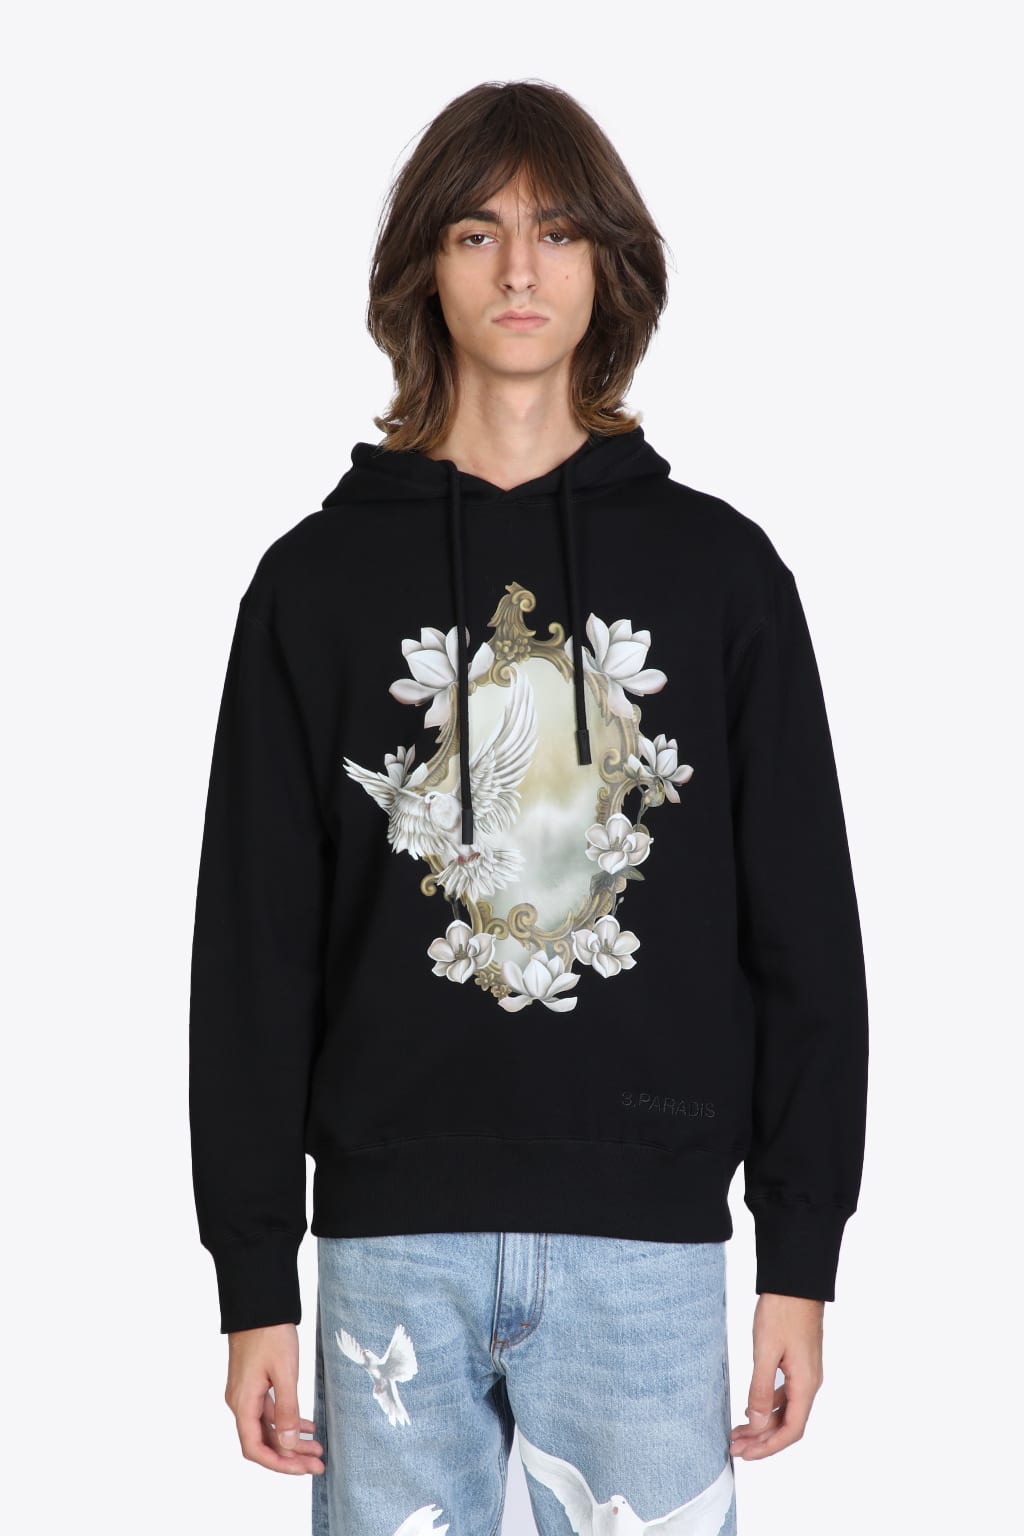 3.Paradis Mirror Hooded Sweater Black cotton hoodie with graphic print - Mirror hooded sweater